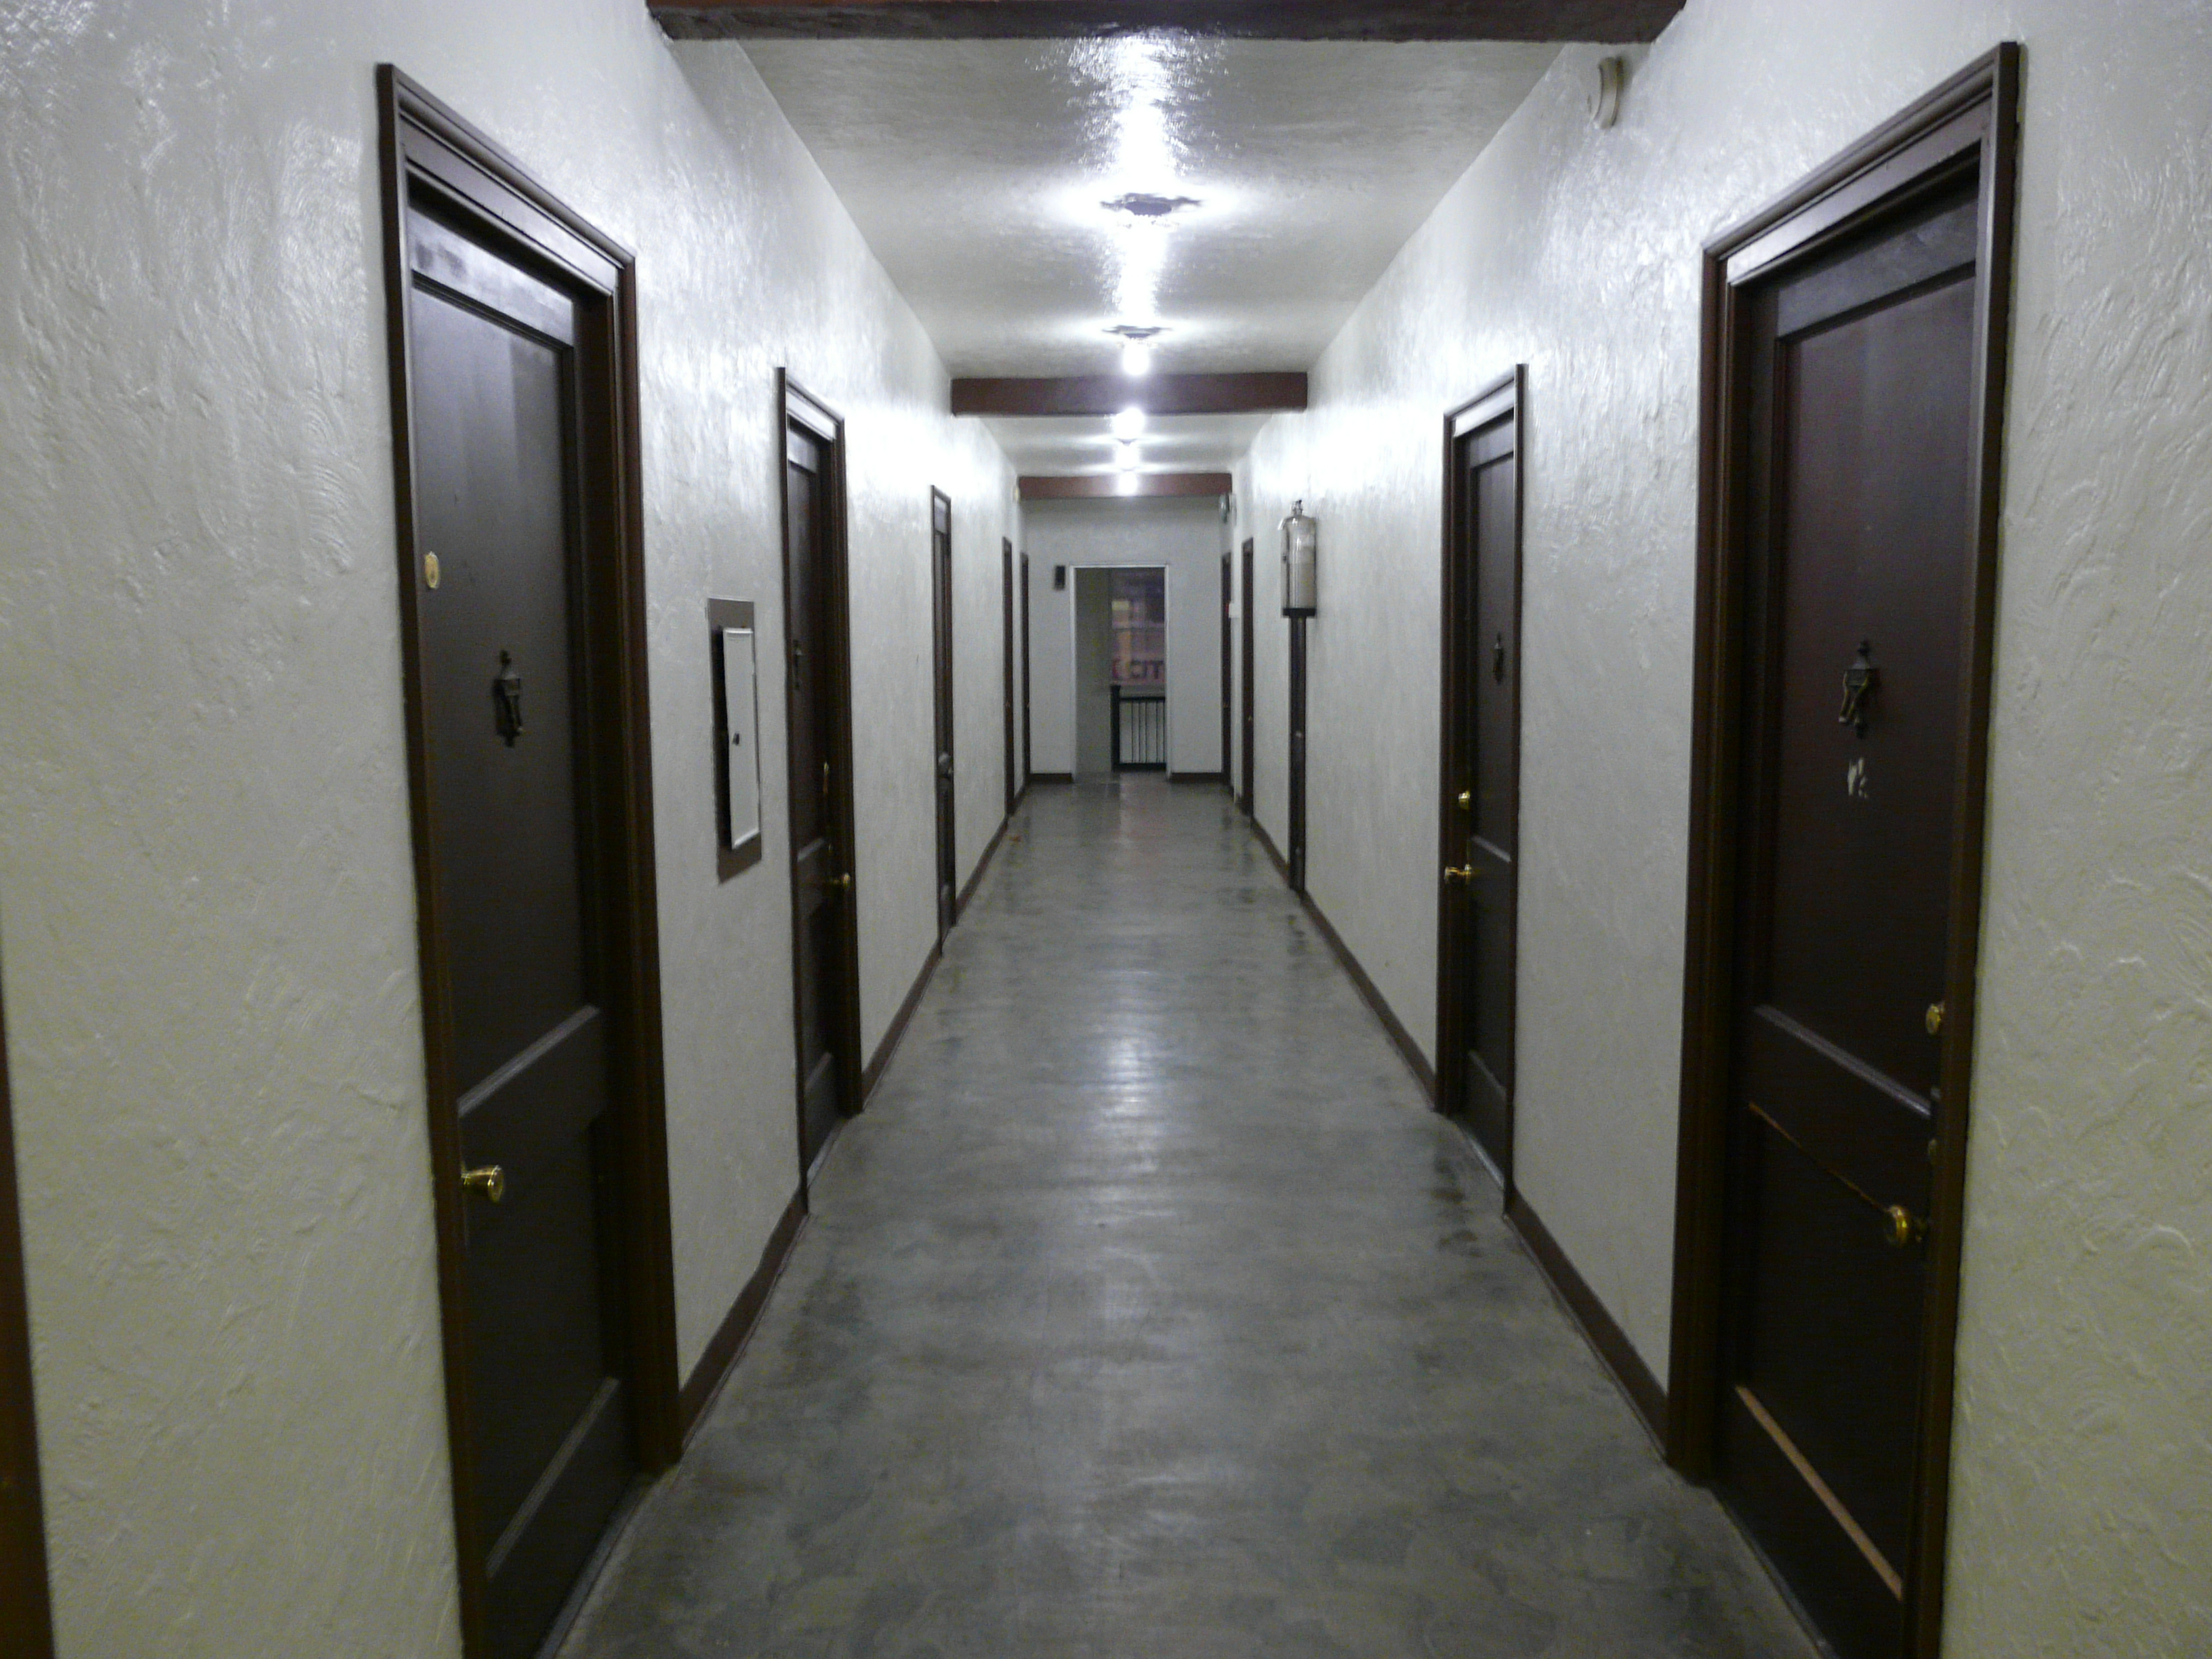 File:White corridor.JPG - Wikimedia Commons